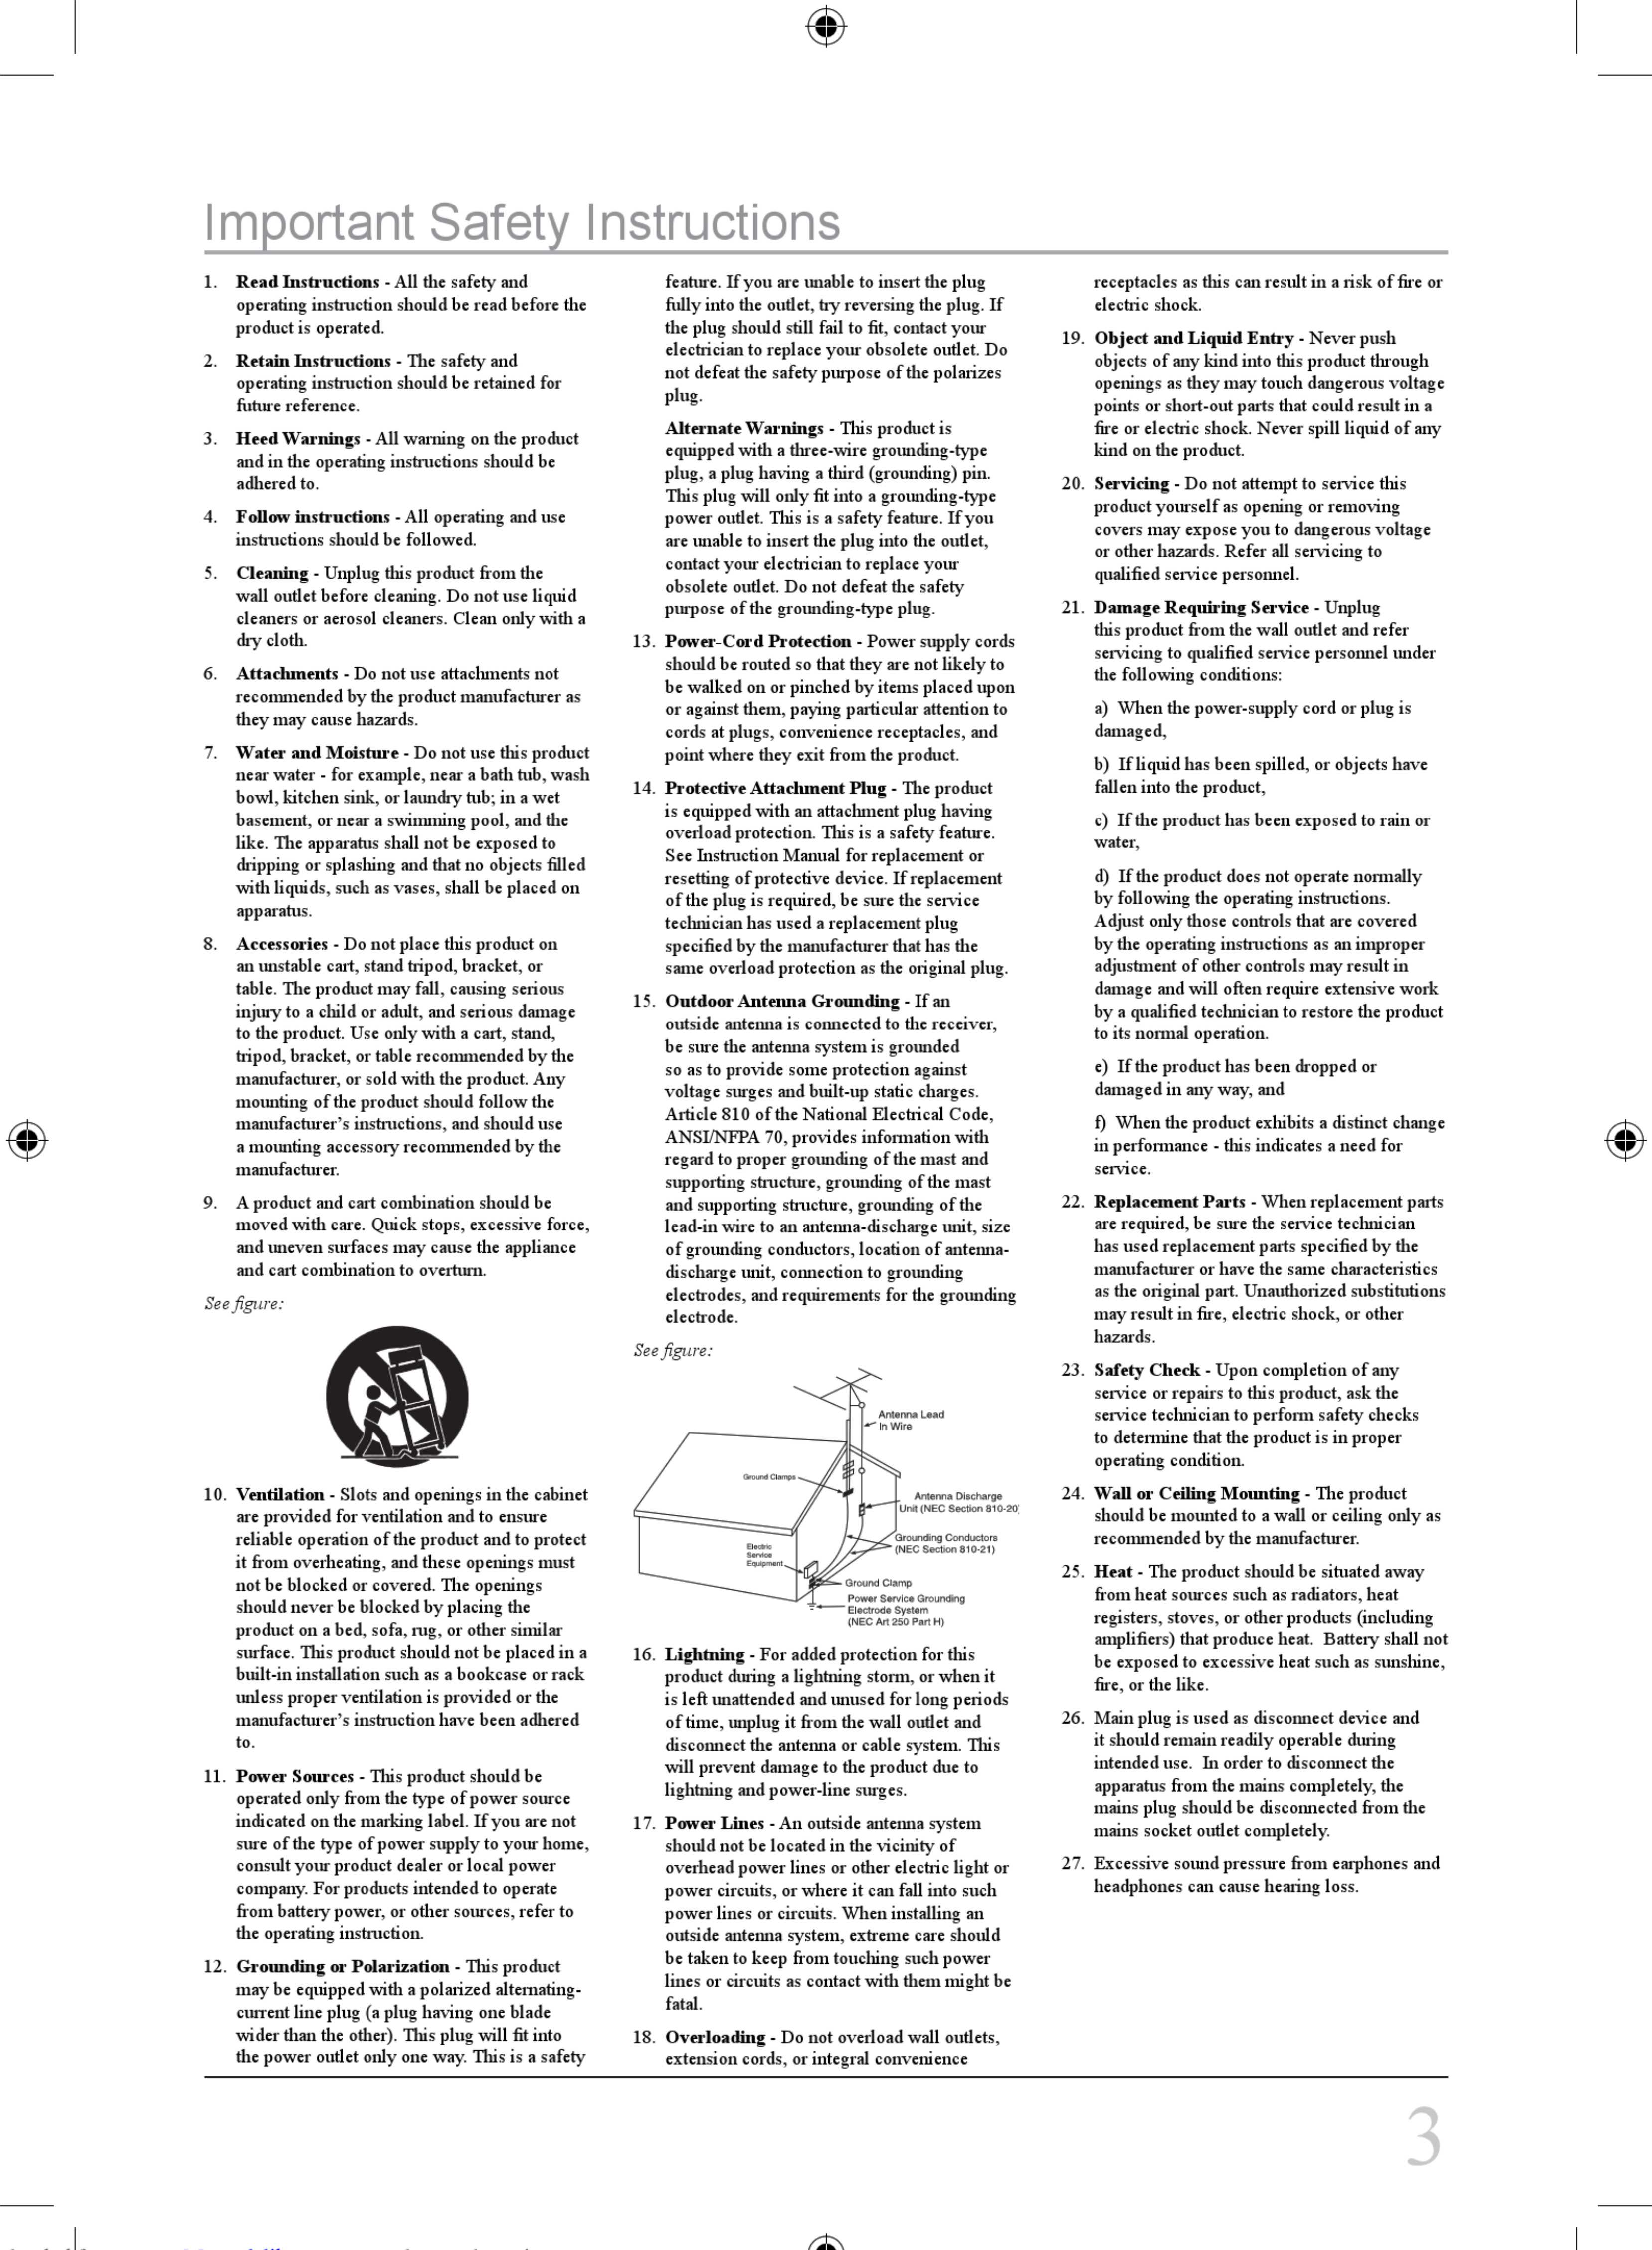 Sylvania scr1986bt as user manual pdf